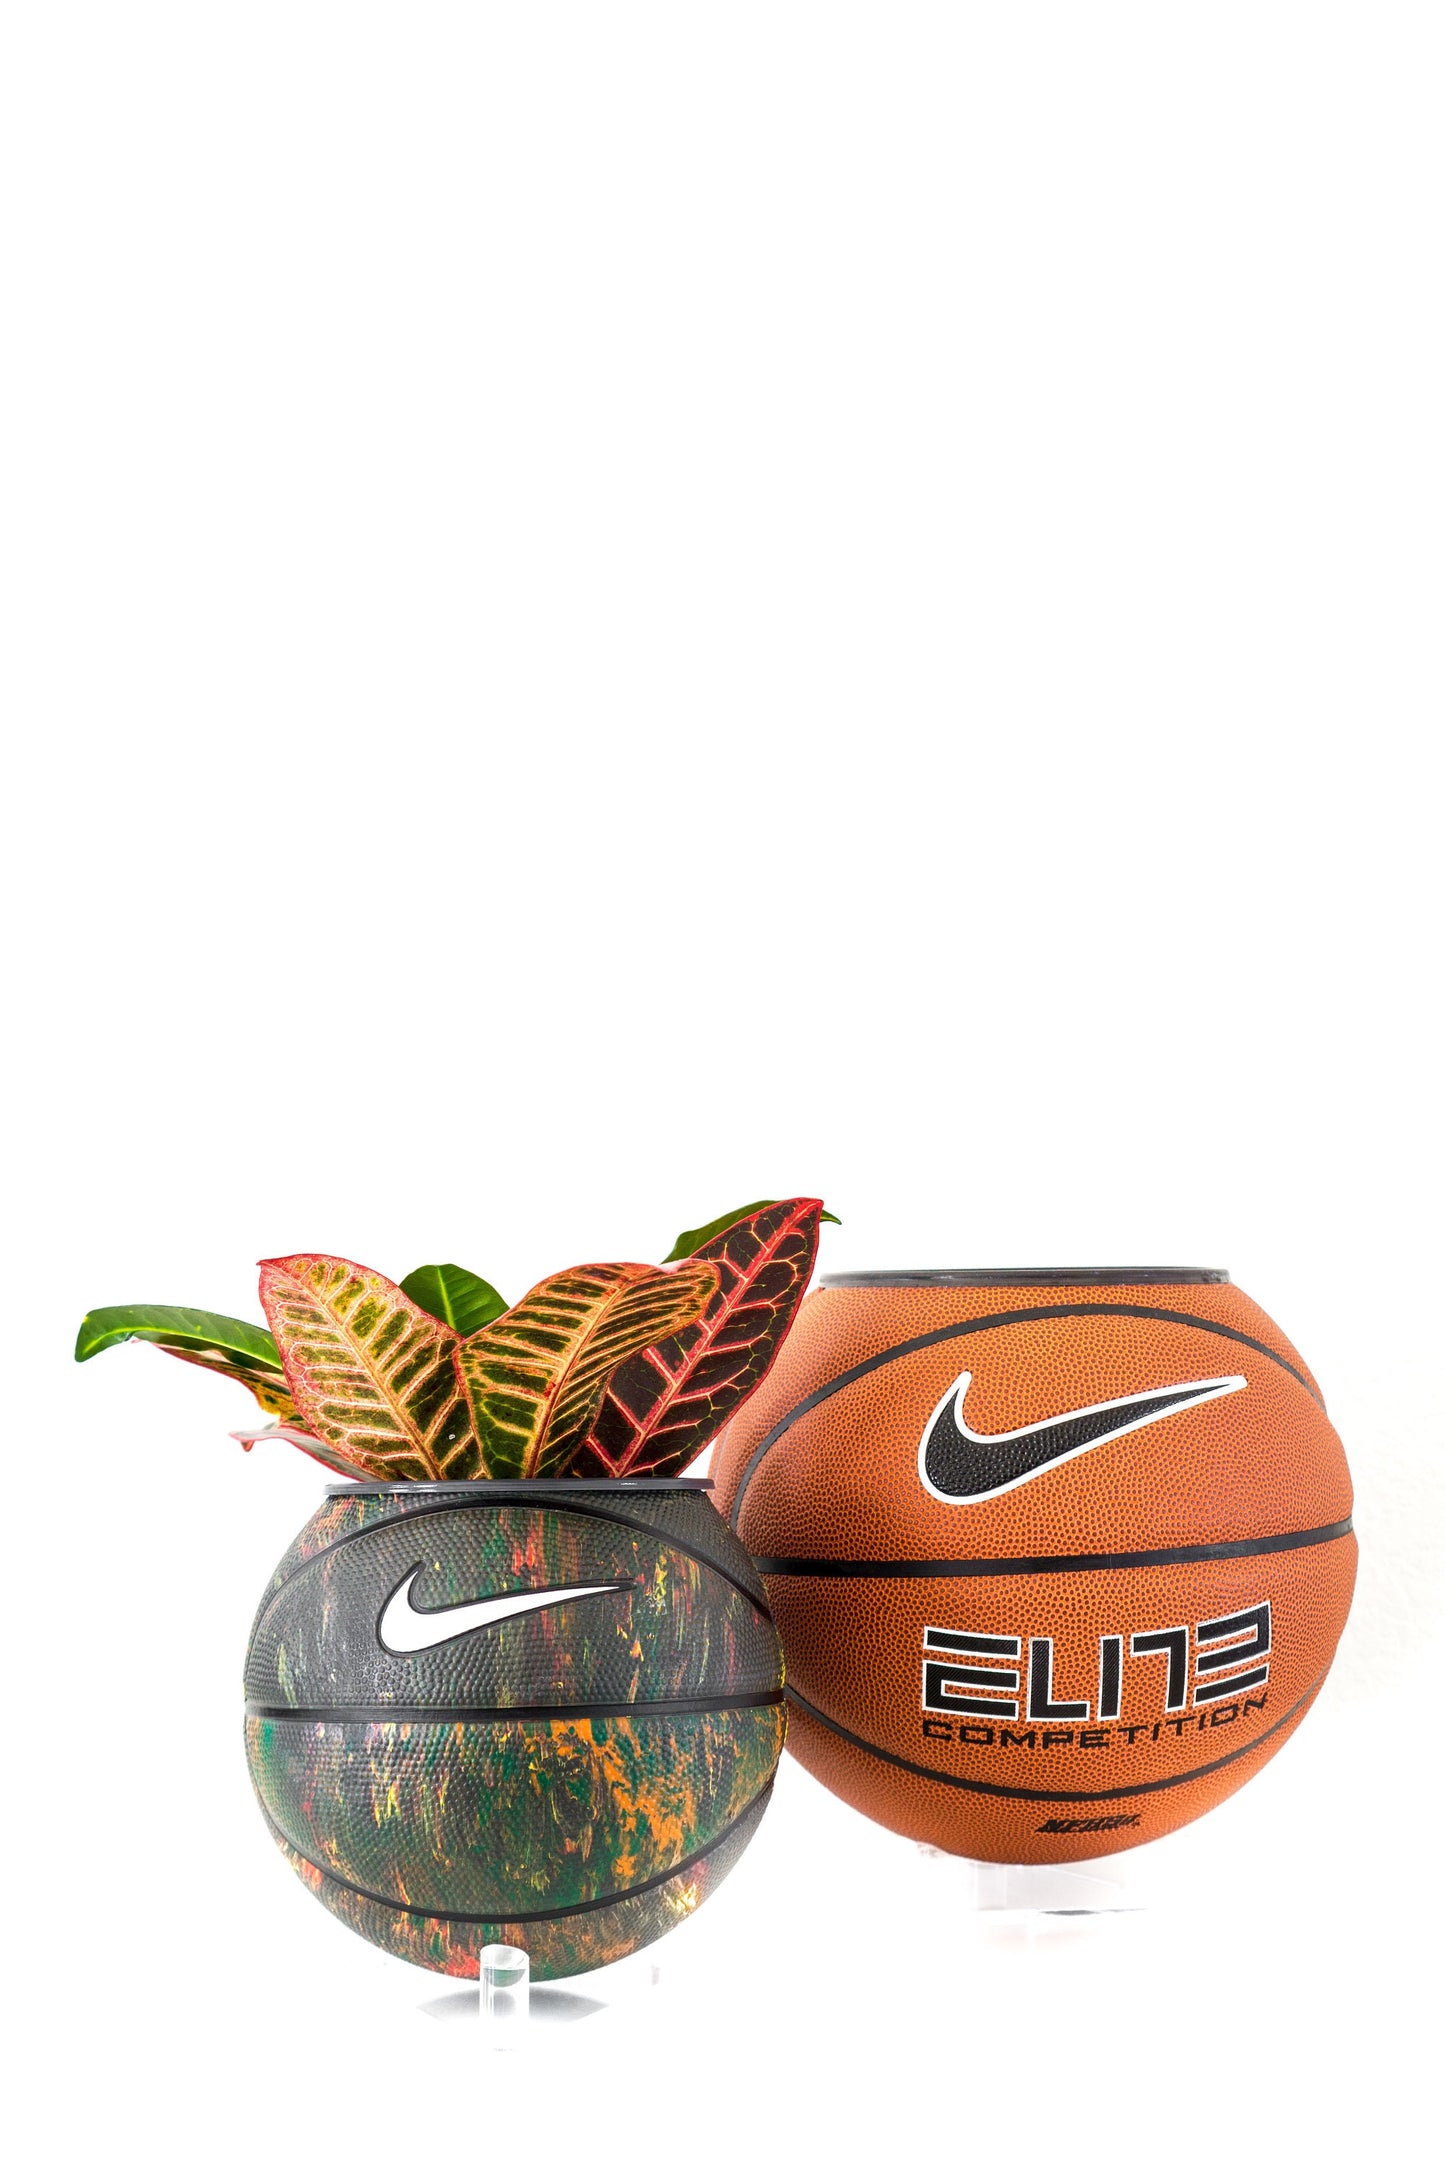 plntrs - Nike Swoosh Skills Revival Sportswear Mini Basketball Planter - new ball with stand